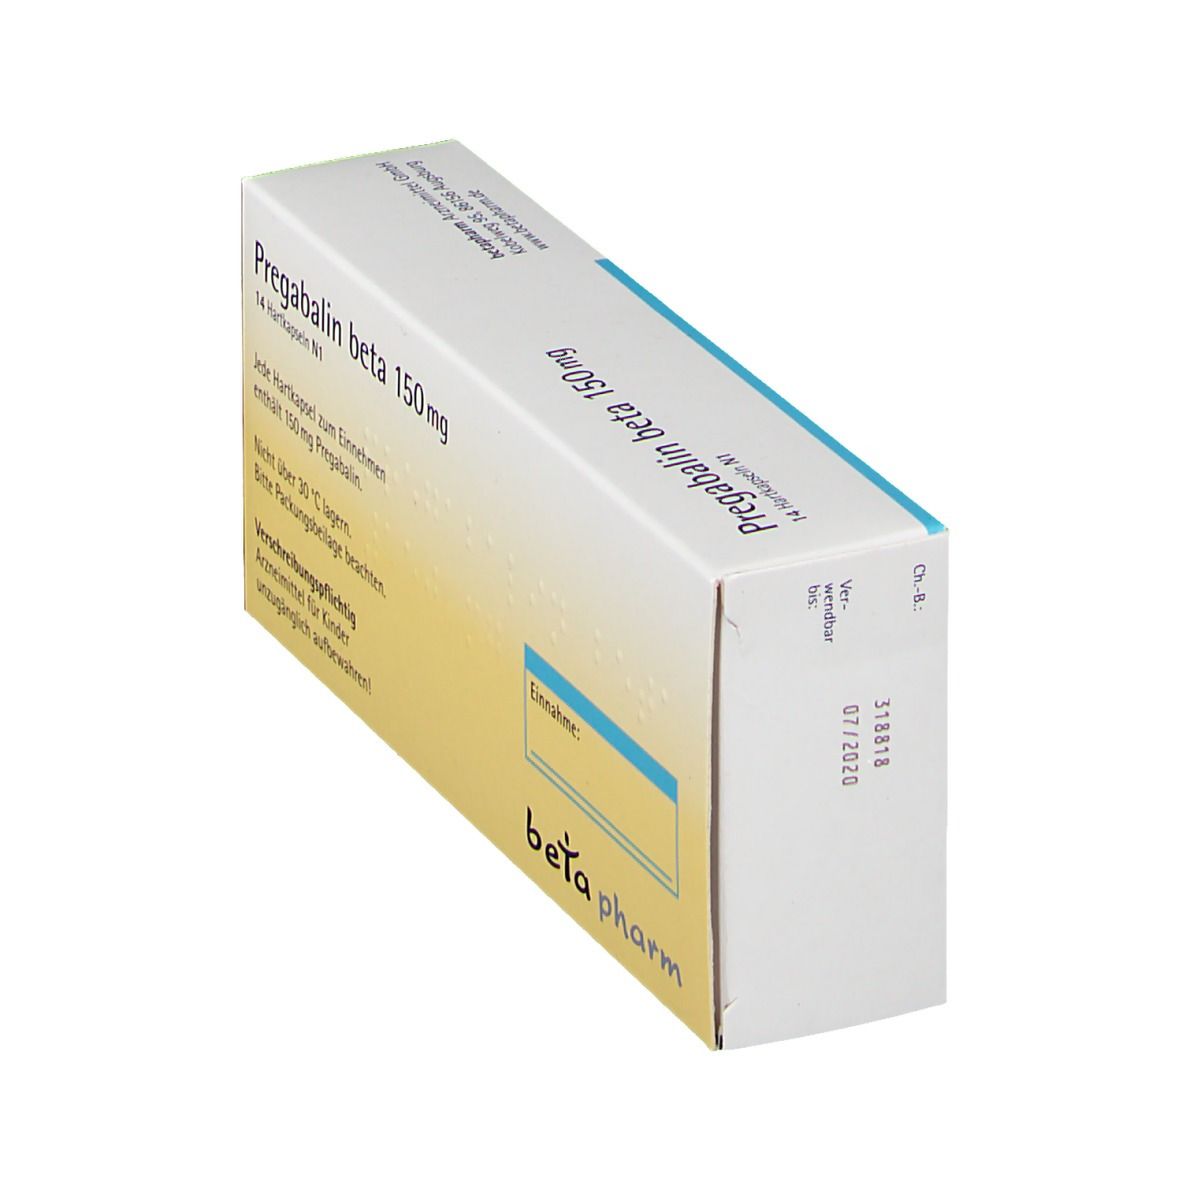 Pregabalin beta 150 mg